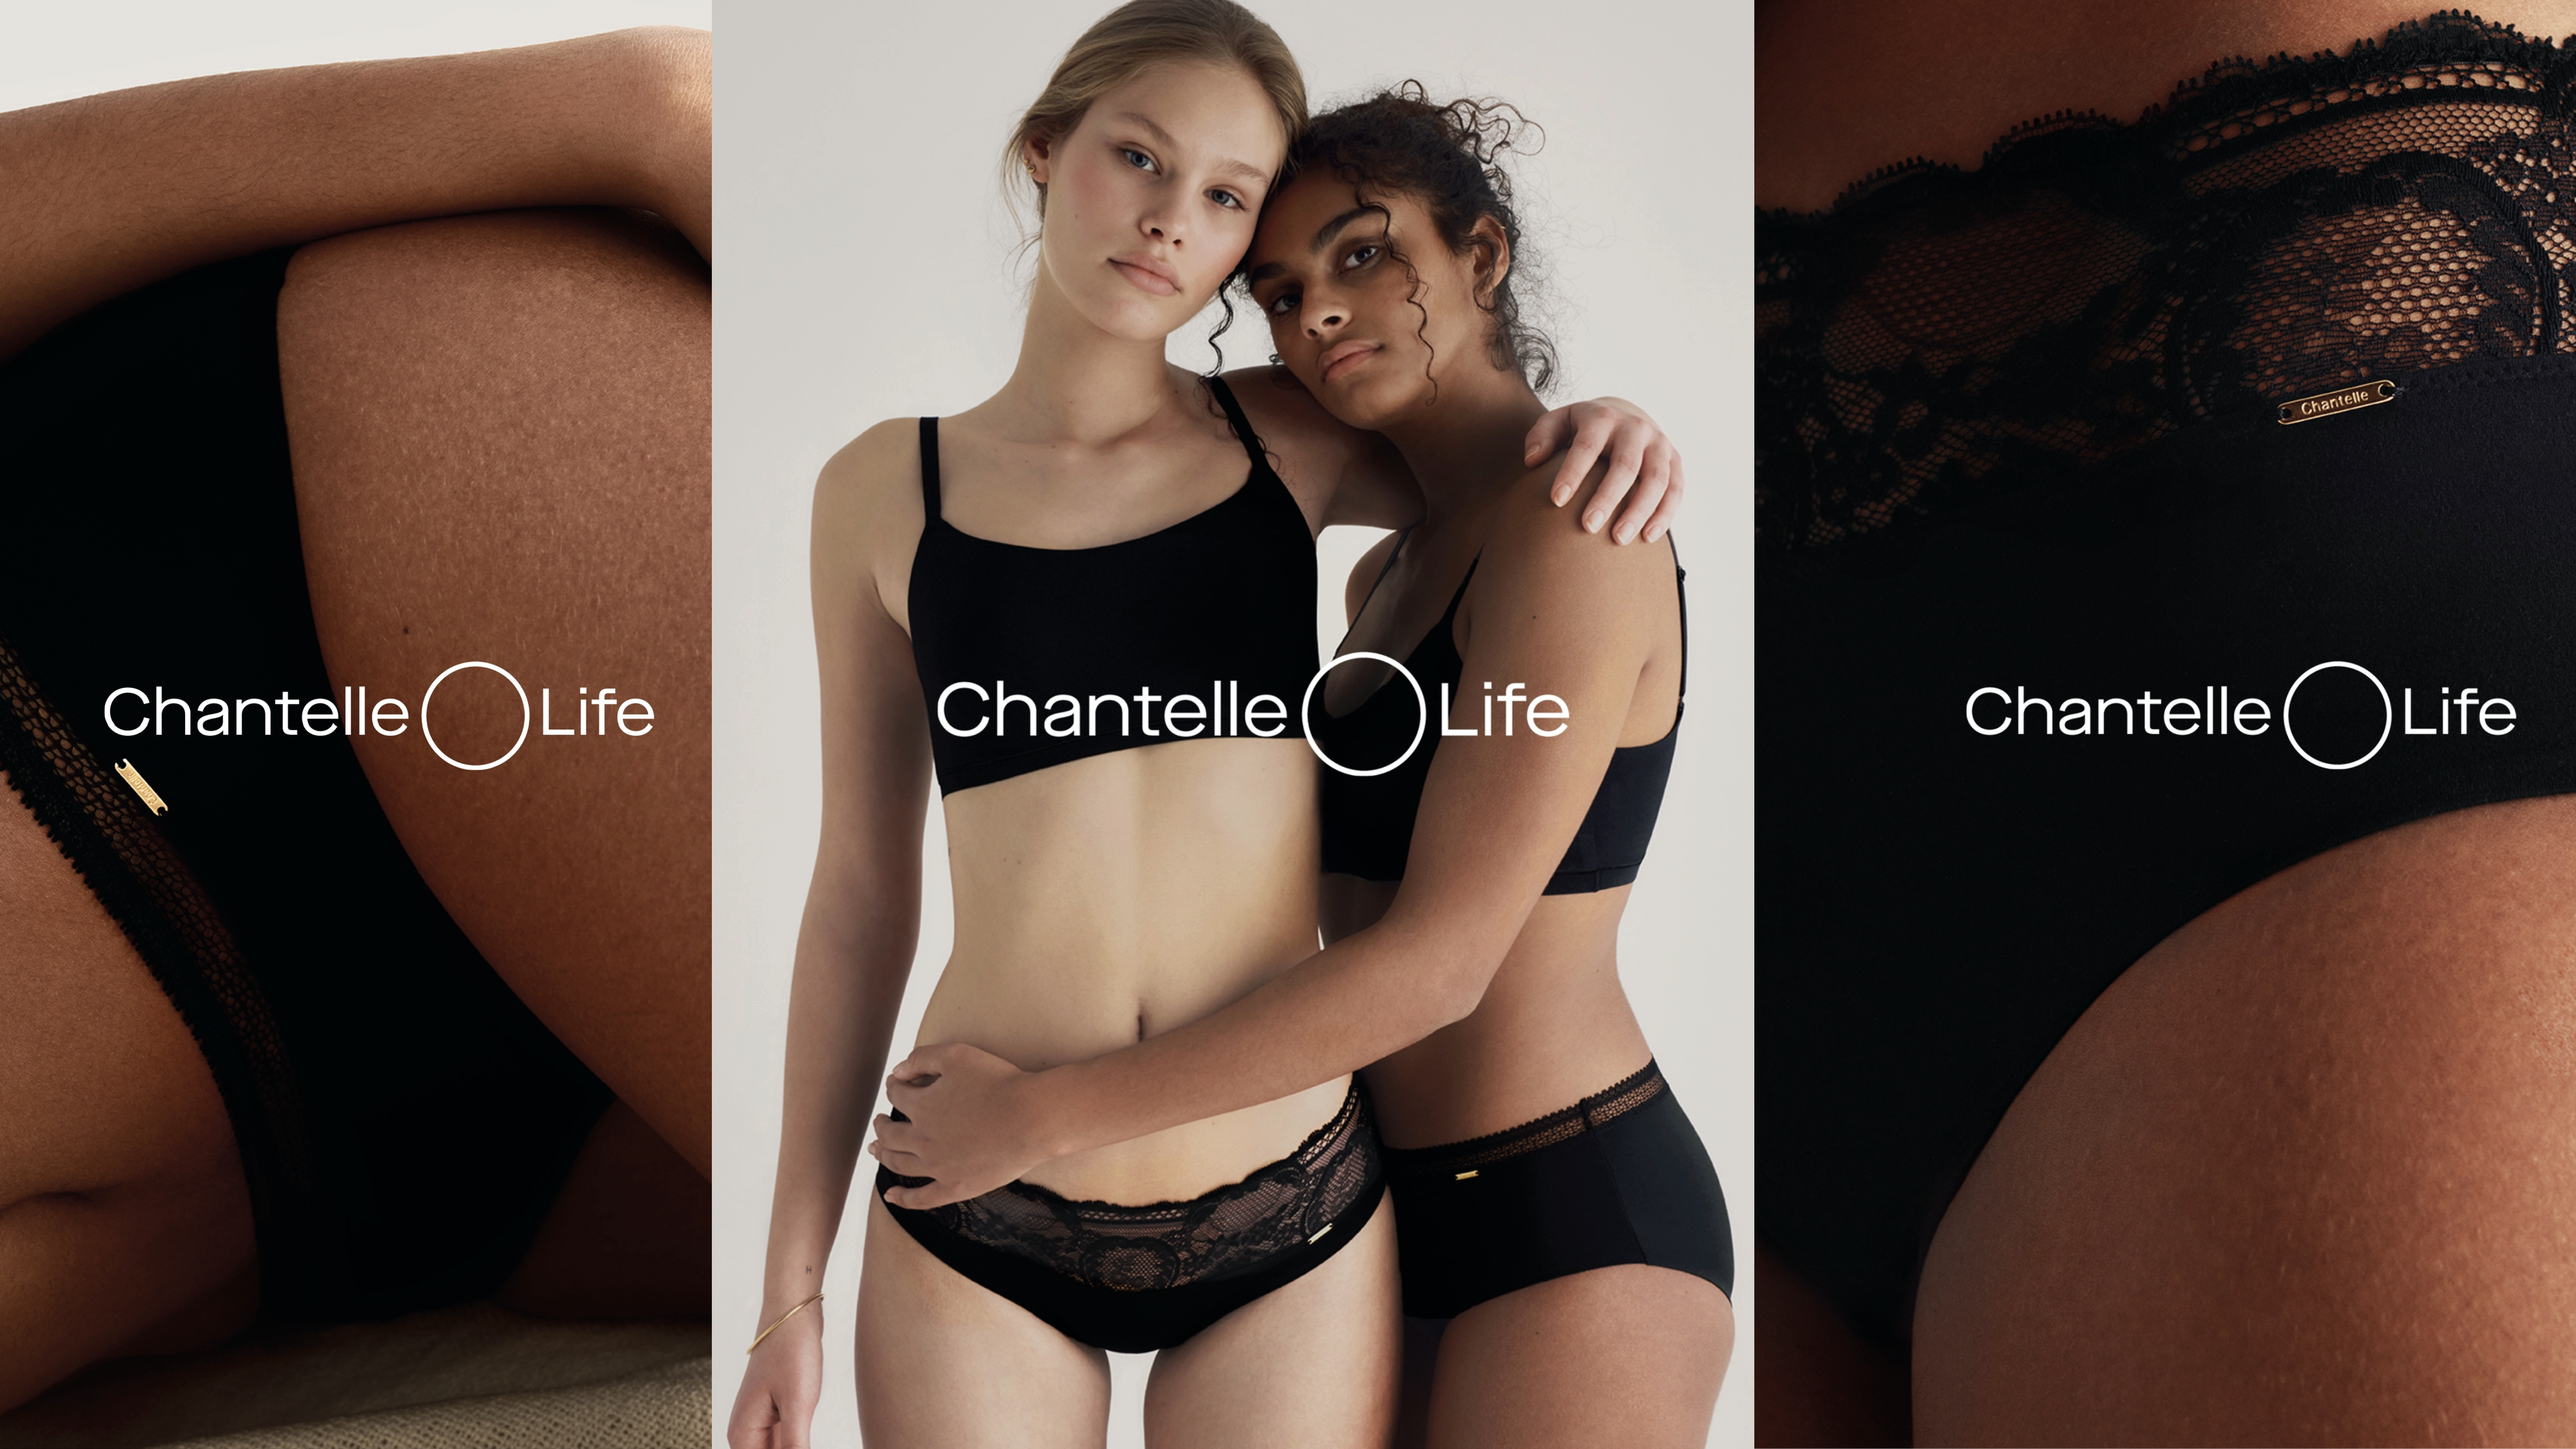 Chantelle Life culotte menstruelle in black panty for menstruation, period